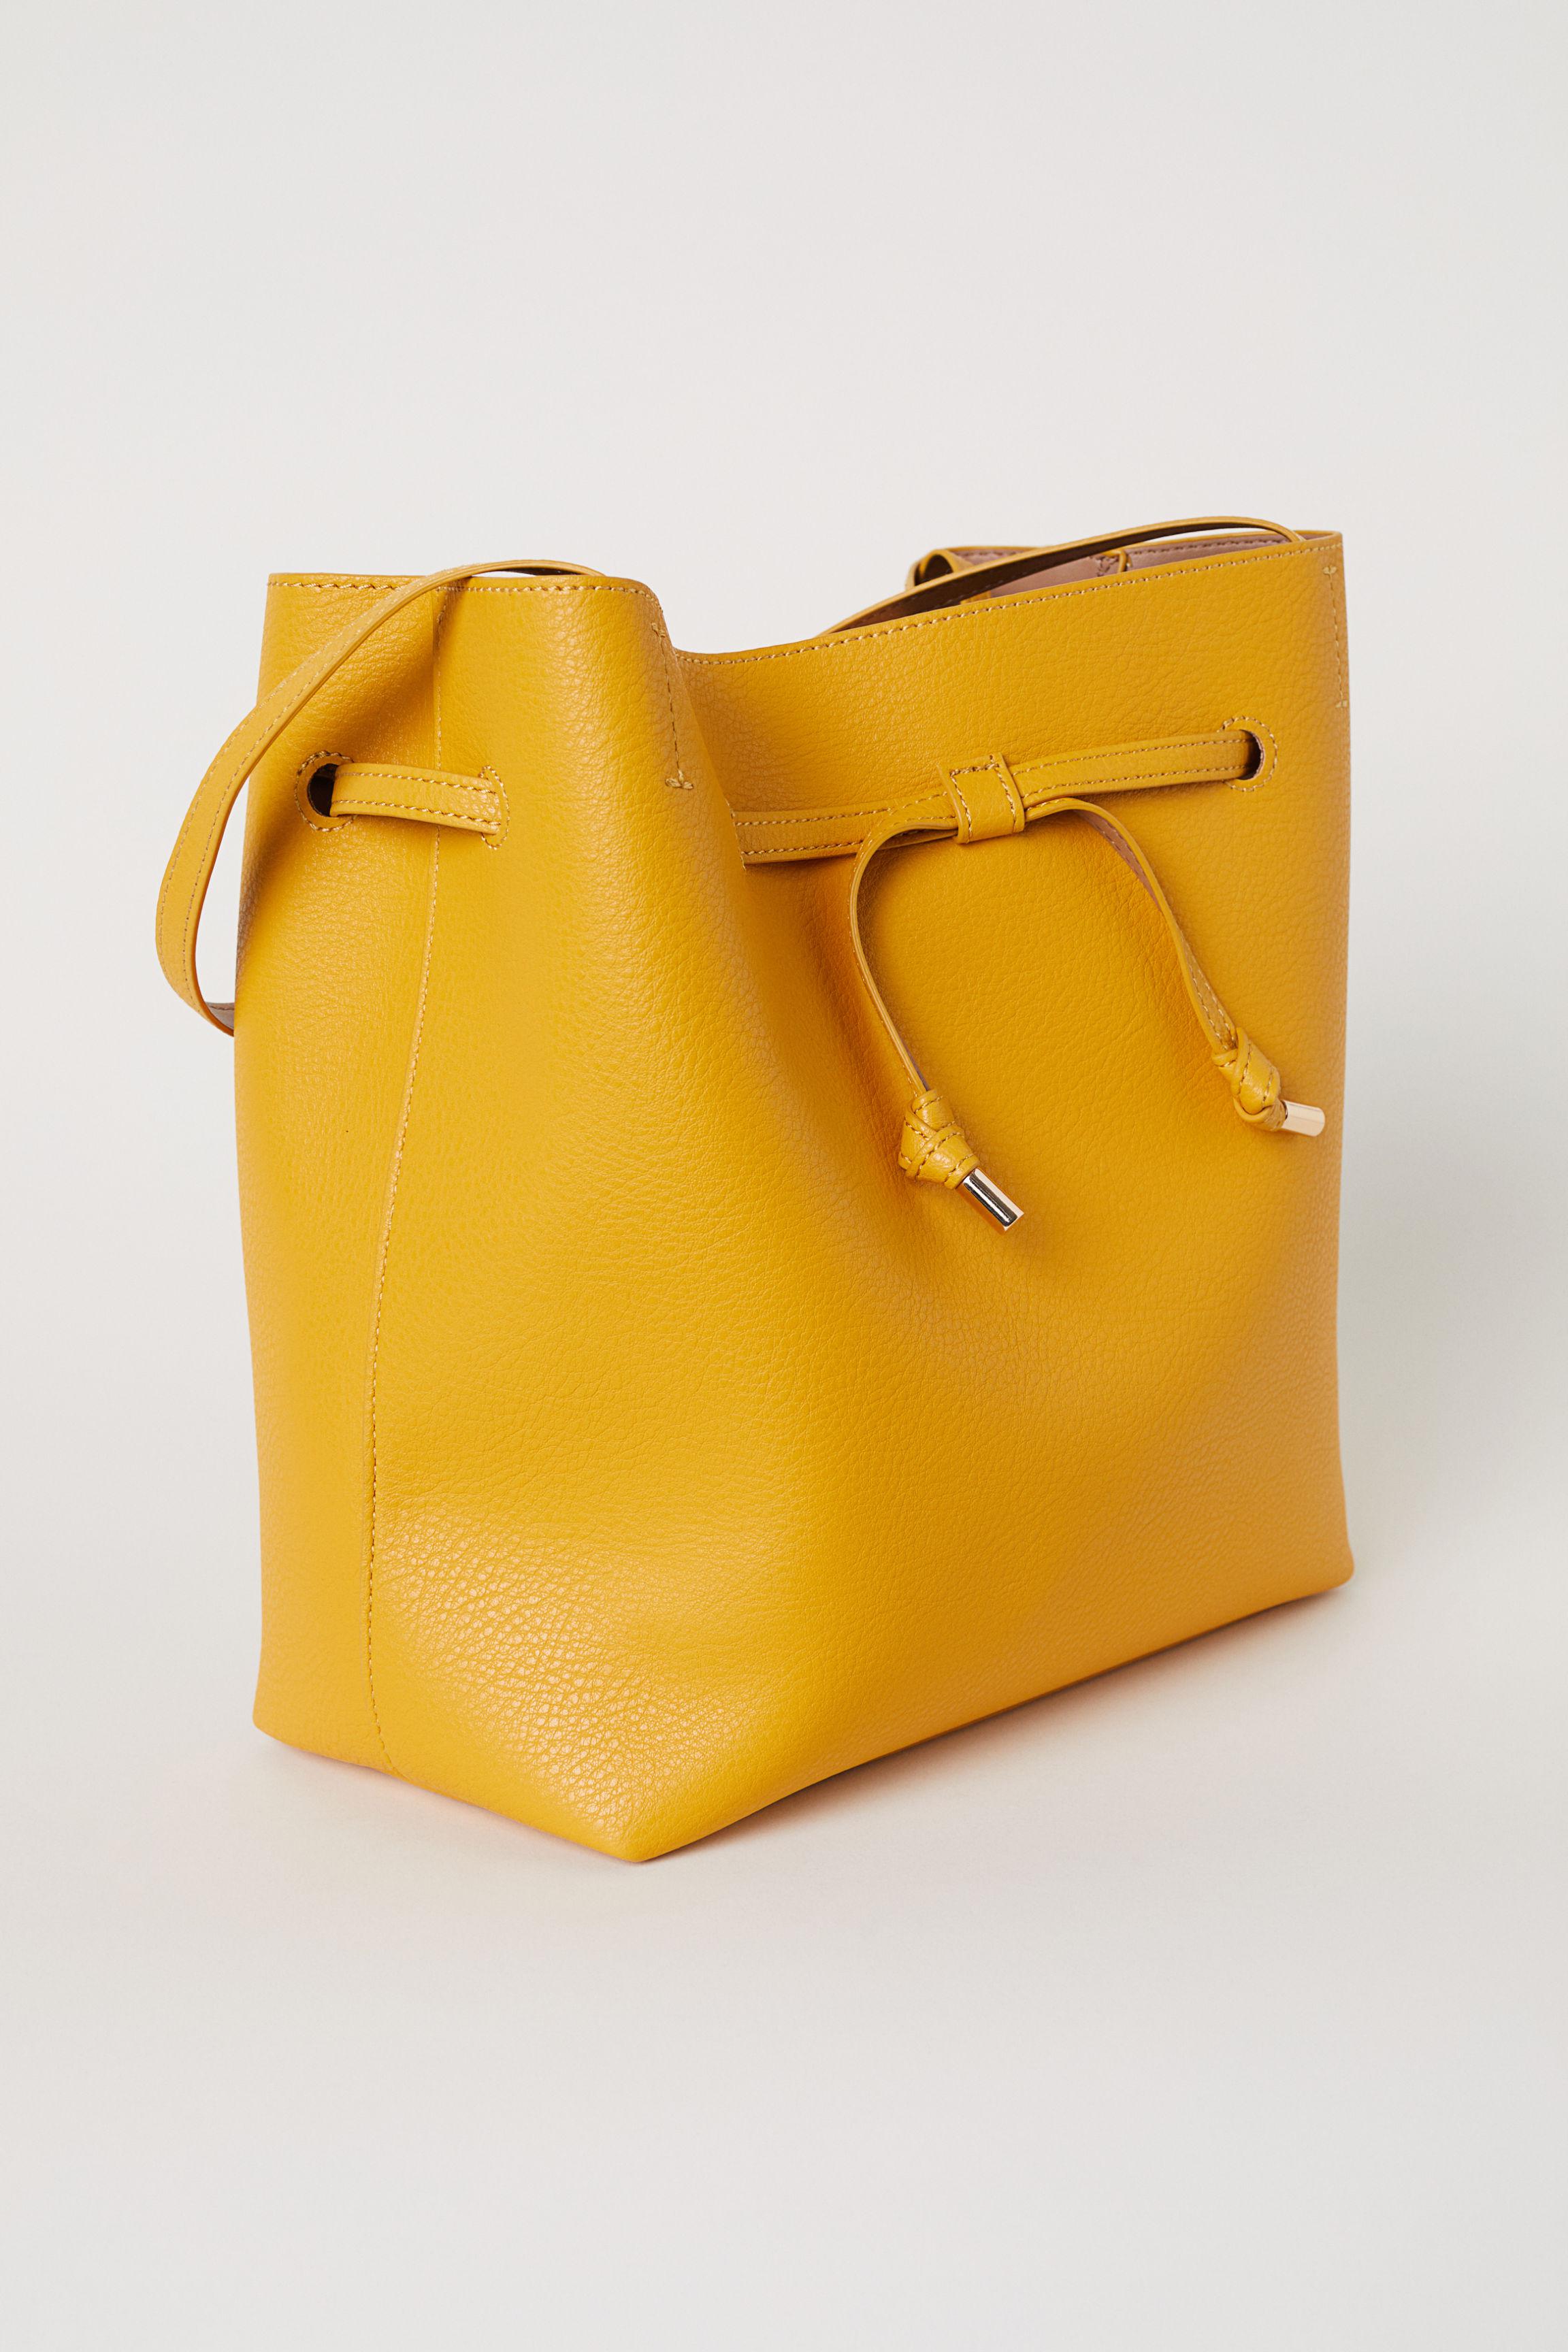 H&M Bucket Bag in Yellow - Lyst